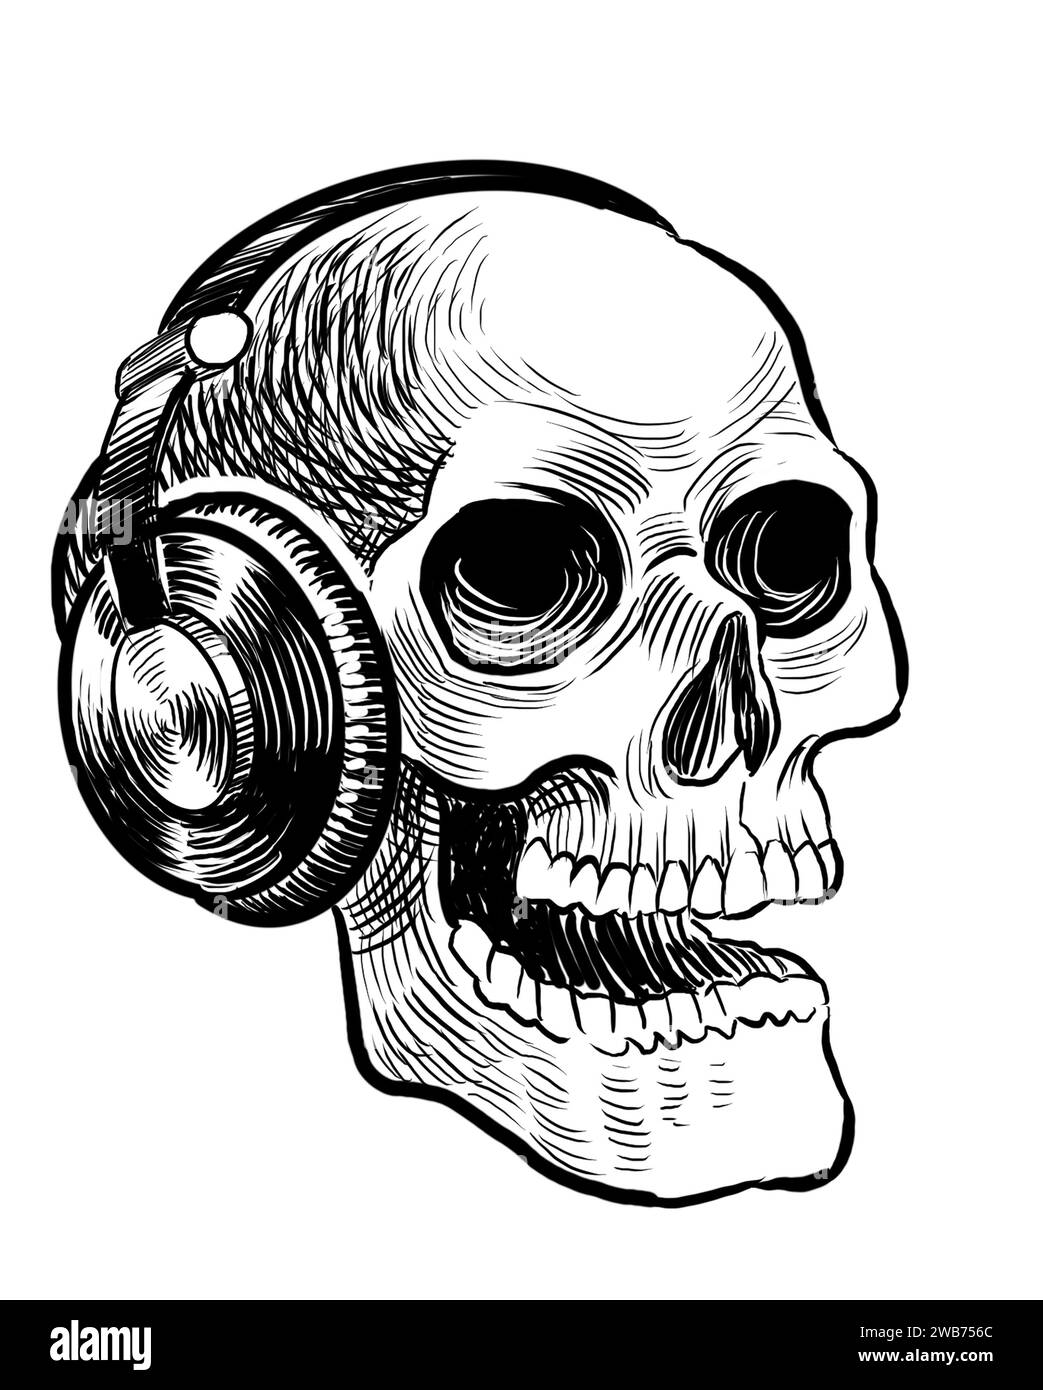 Skull in headphone. Hand-drawn black and white illustration Stock Photo ...